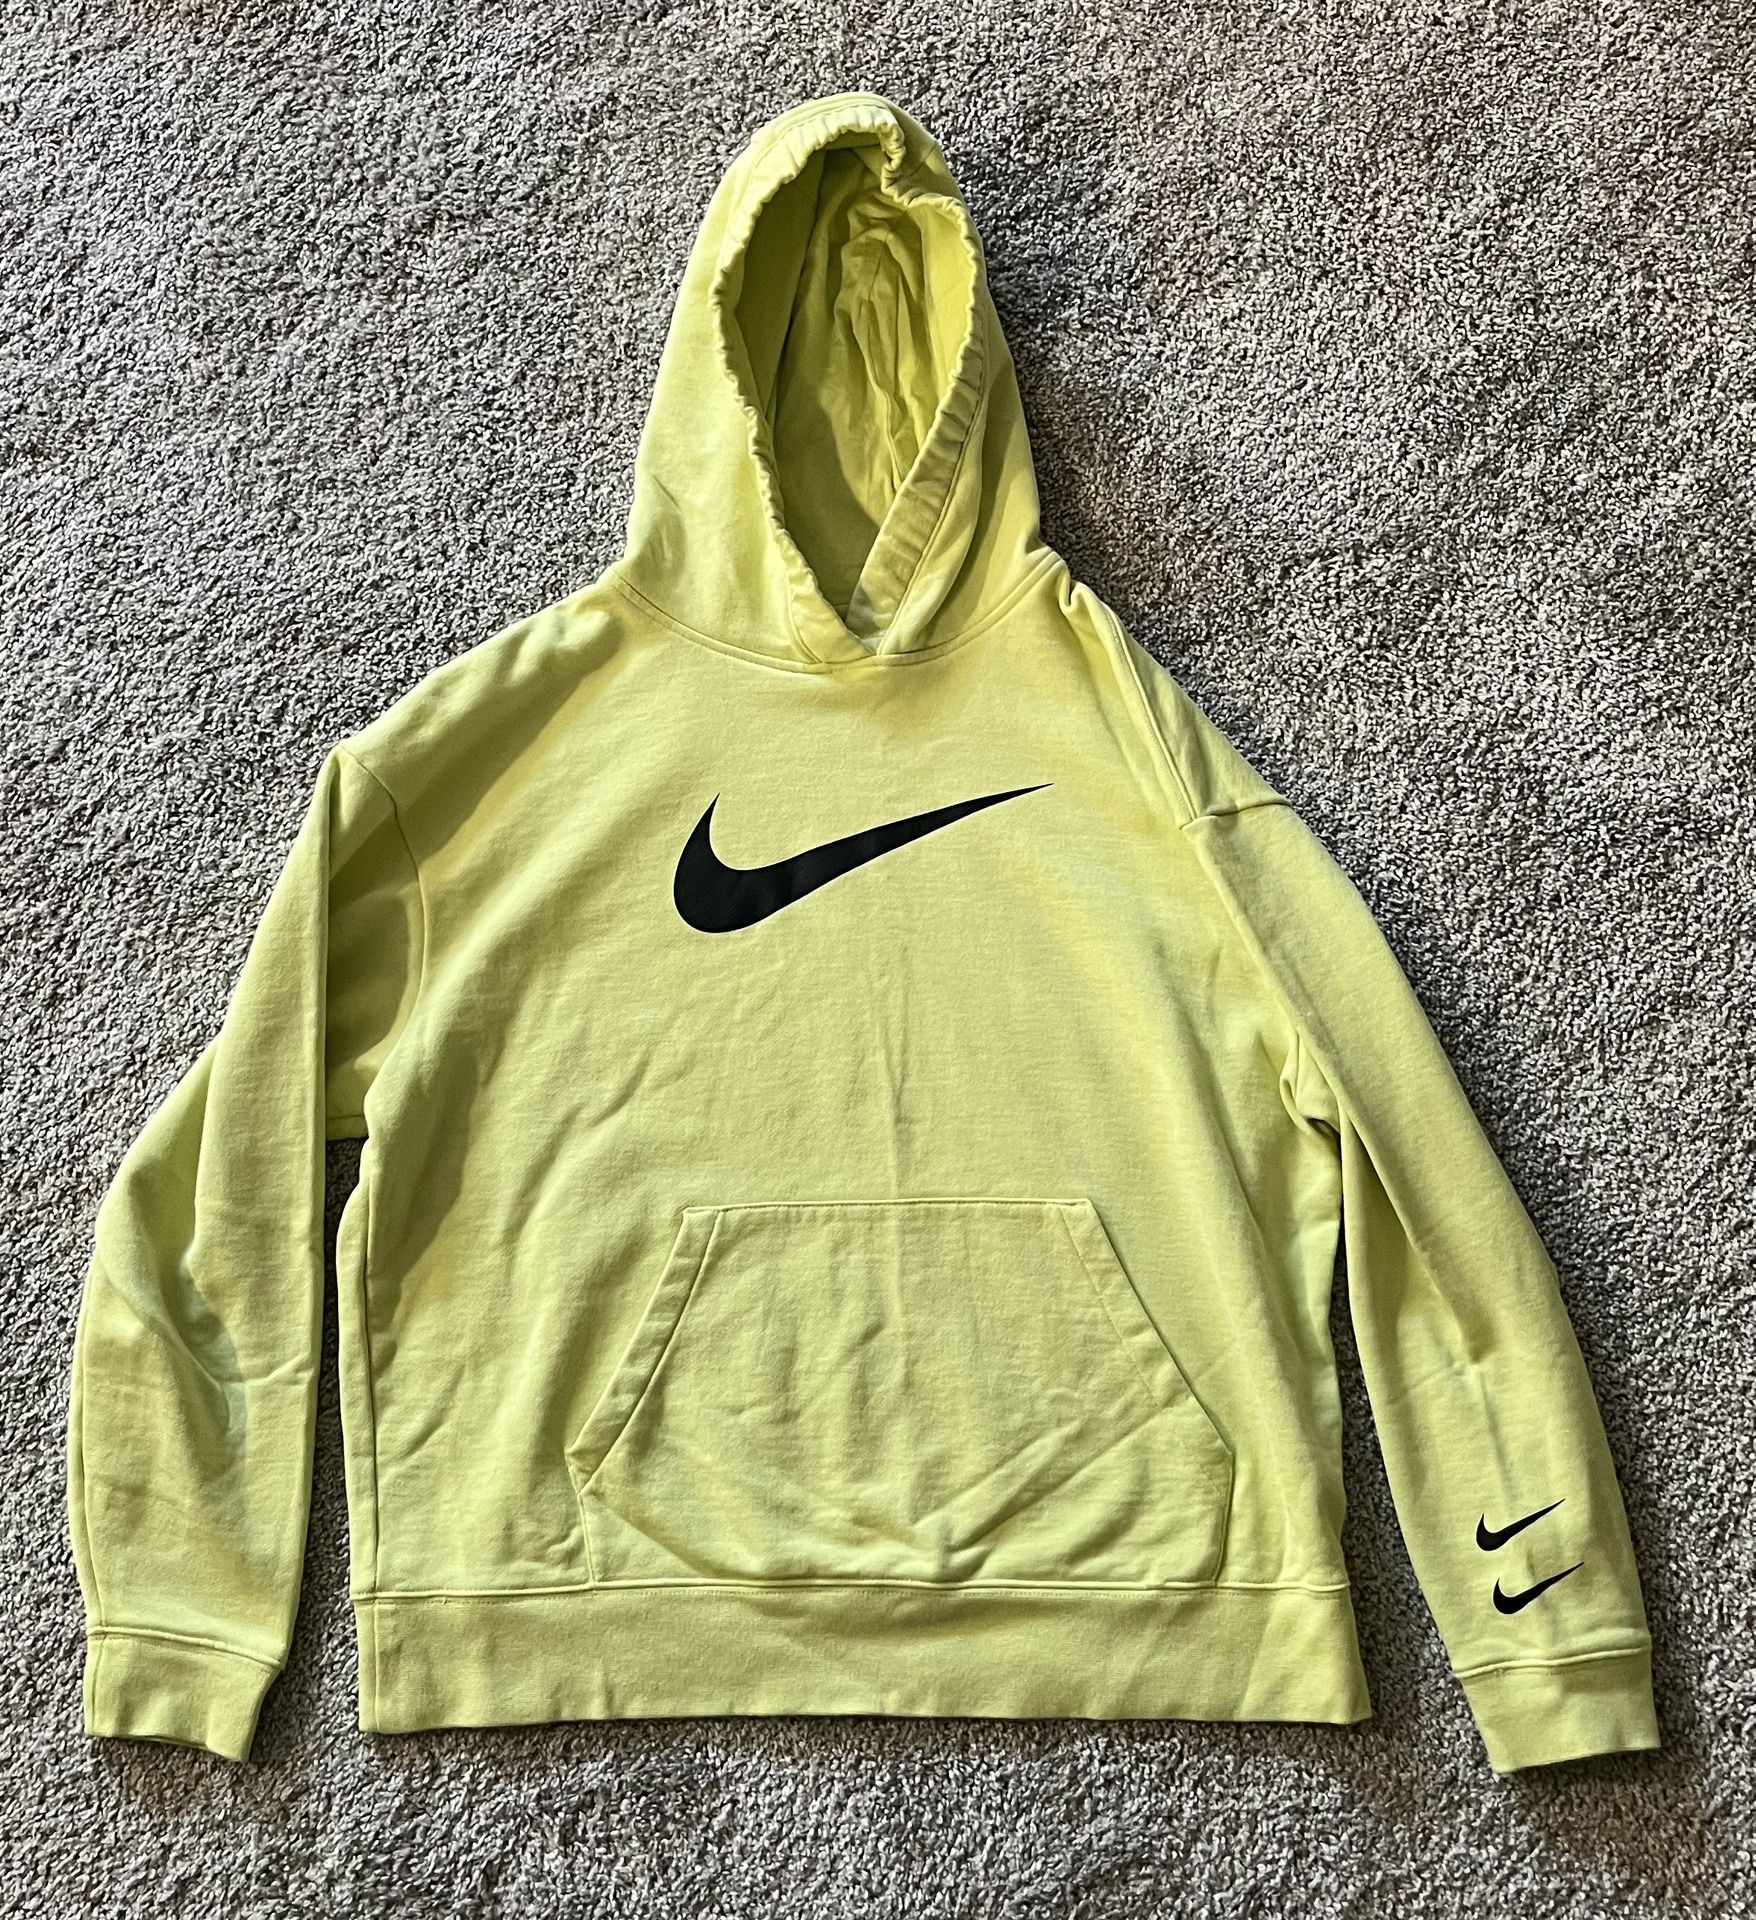 Nike Womens Long Sleeve Hoodie Lime Green Double Check On Sleeve - Medium Size